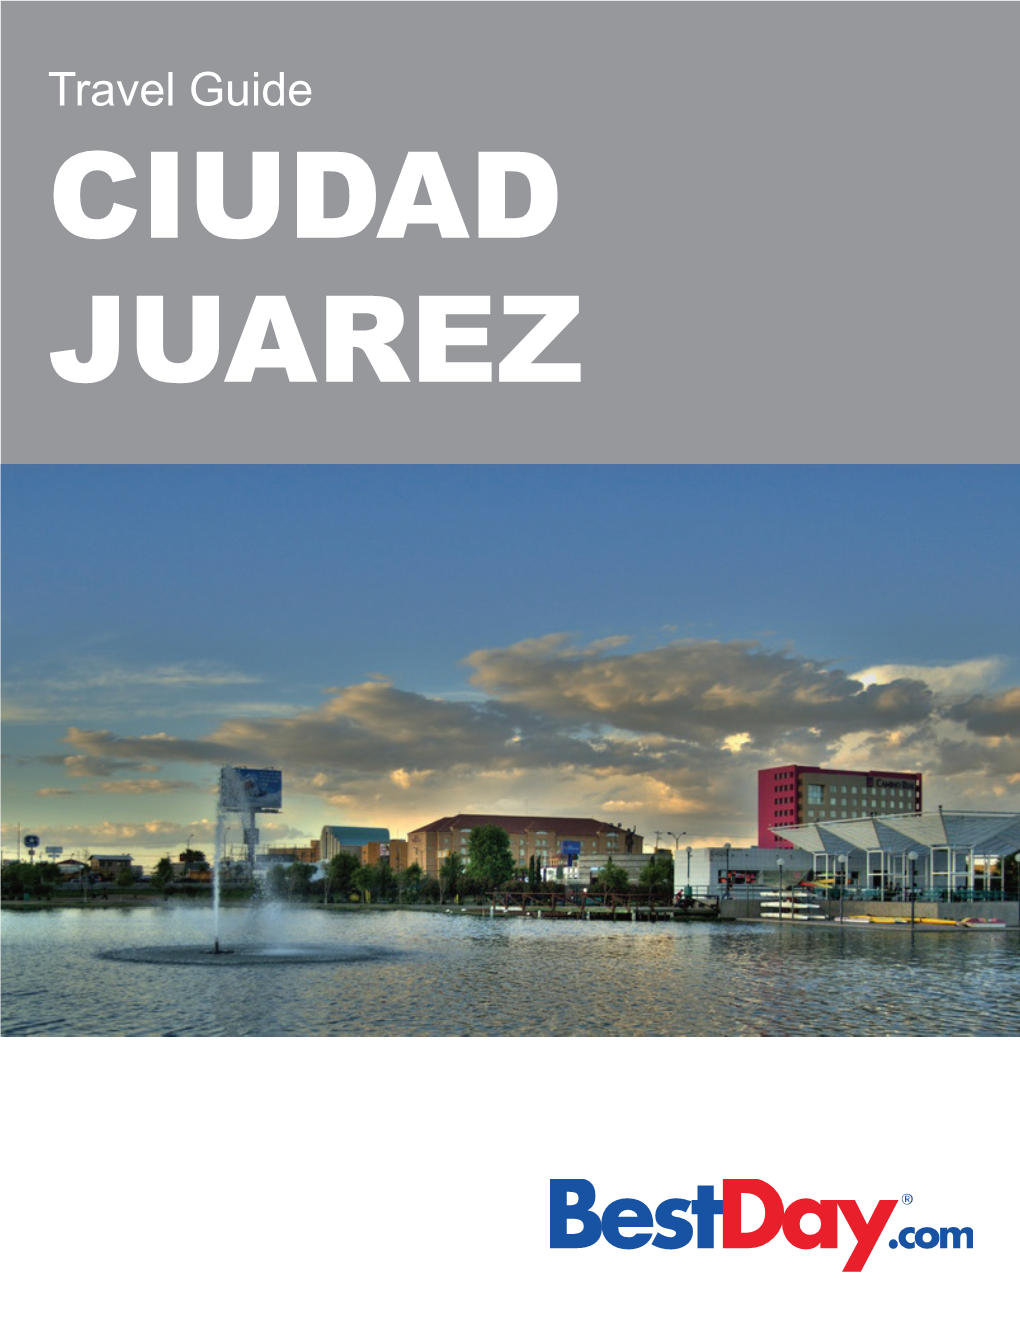 Travel Guide CIUDAD JUAREZ Contents